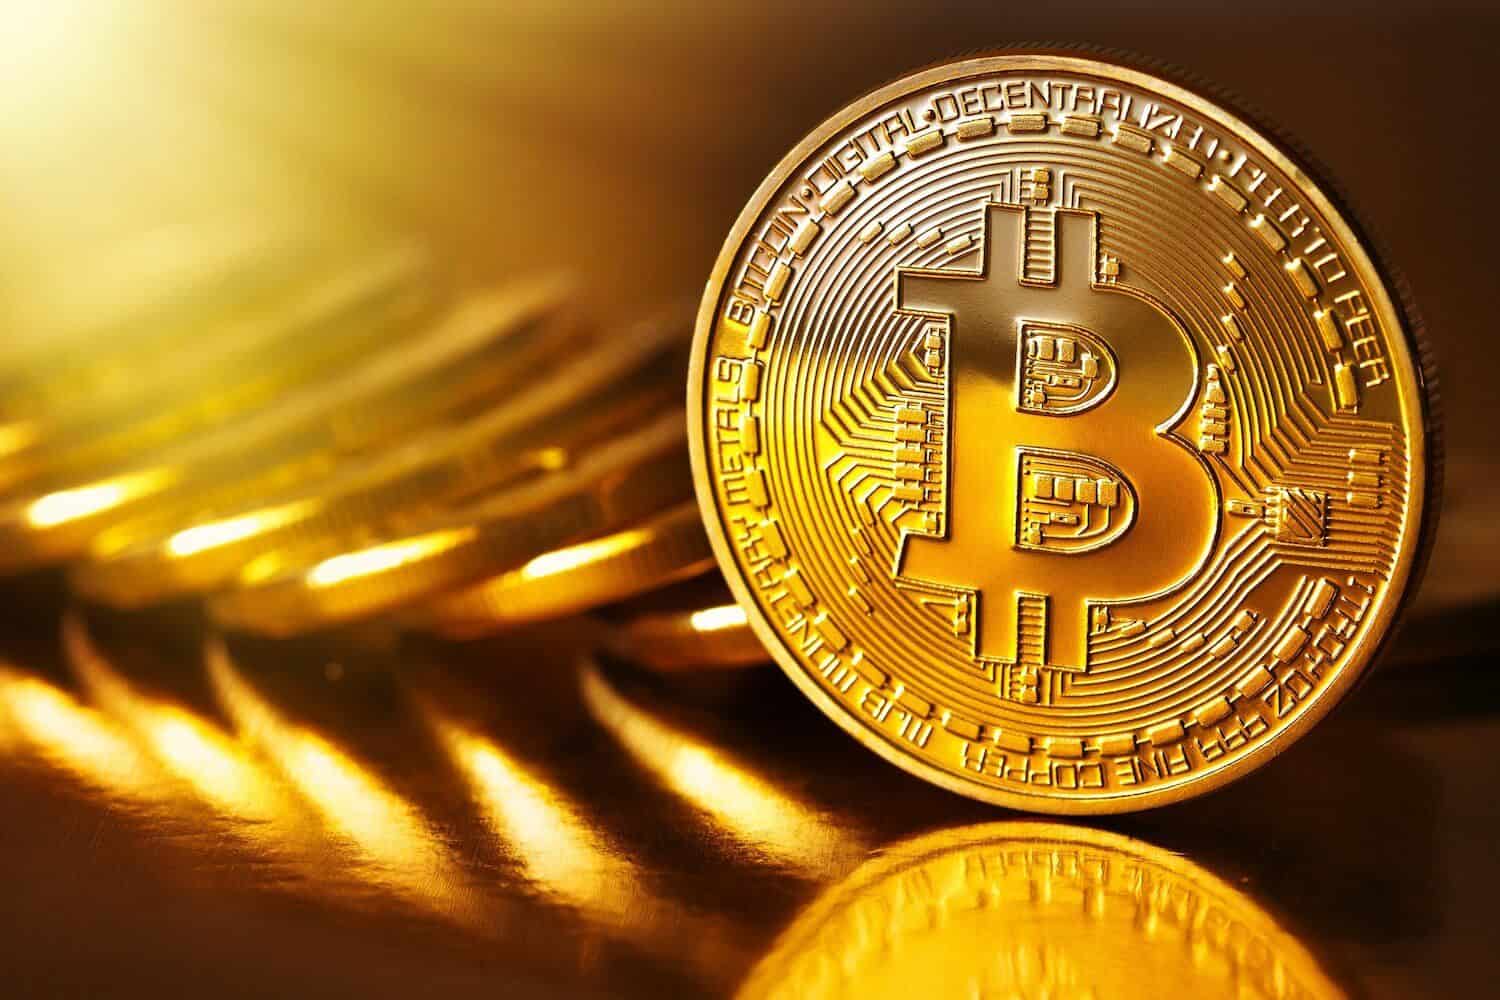 Mike Novogratz Believes This is Bitcoin’s “Moment”